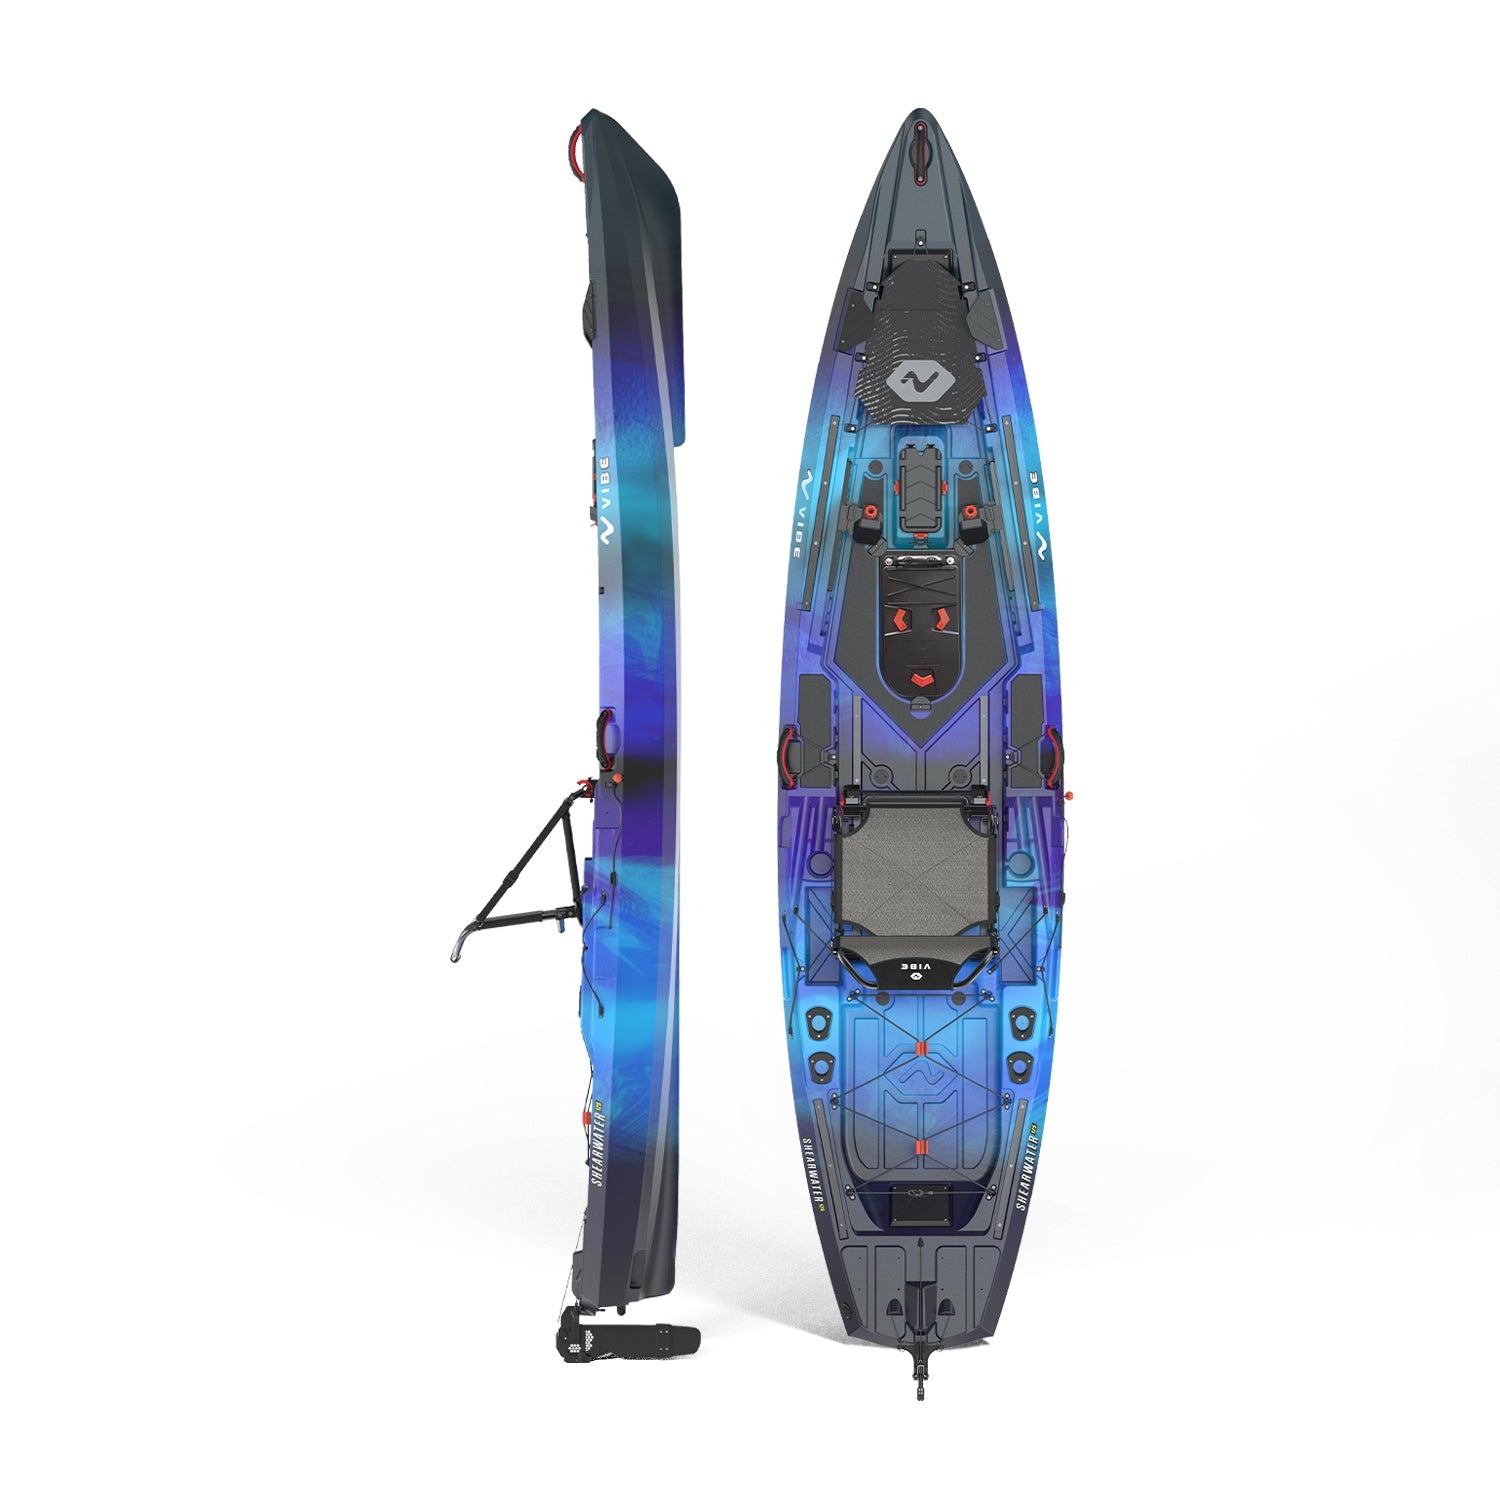 Vibe Evolve 230-250 Centimeter Adjustable Fiberglass Paddle